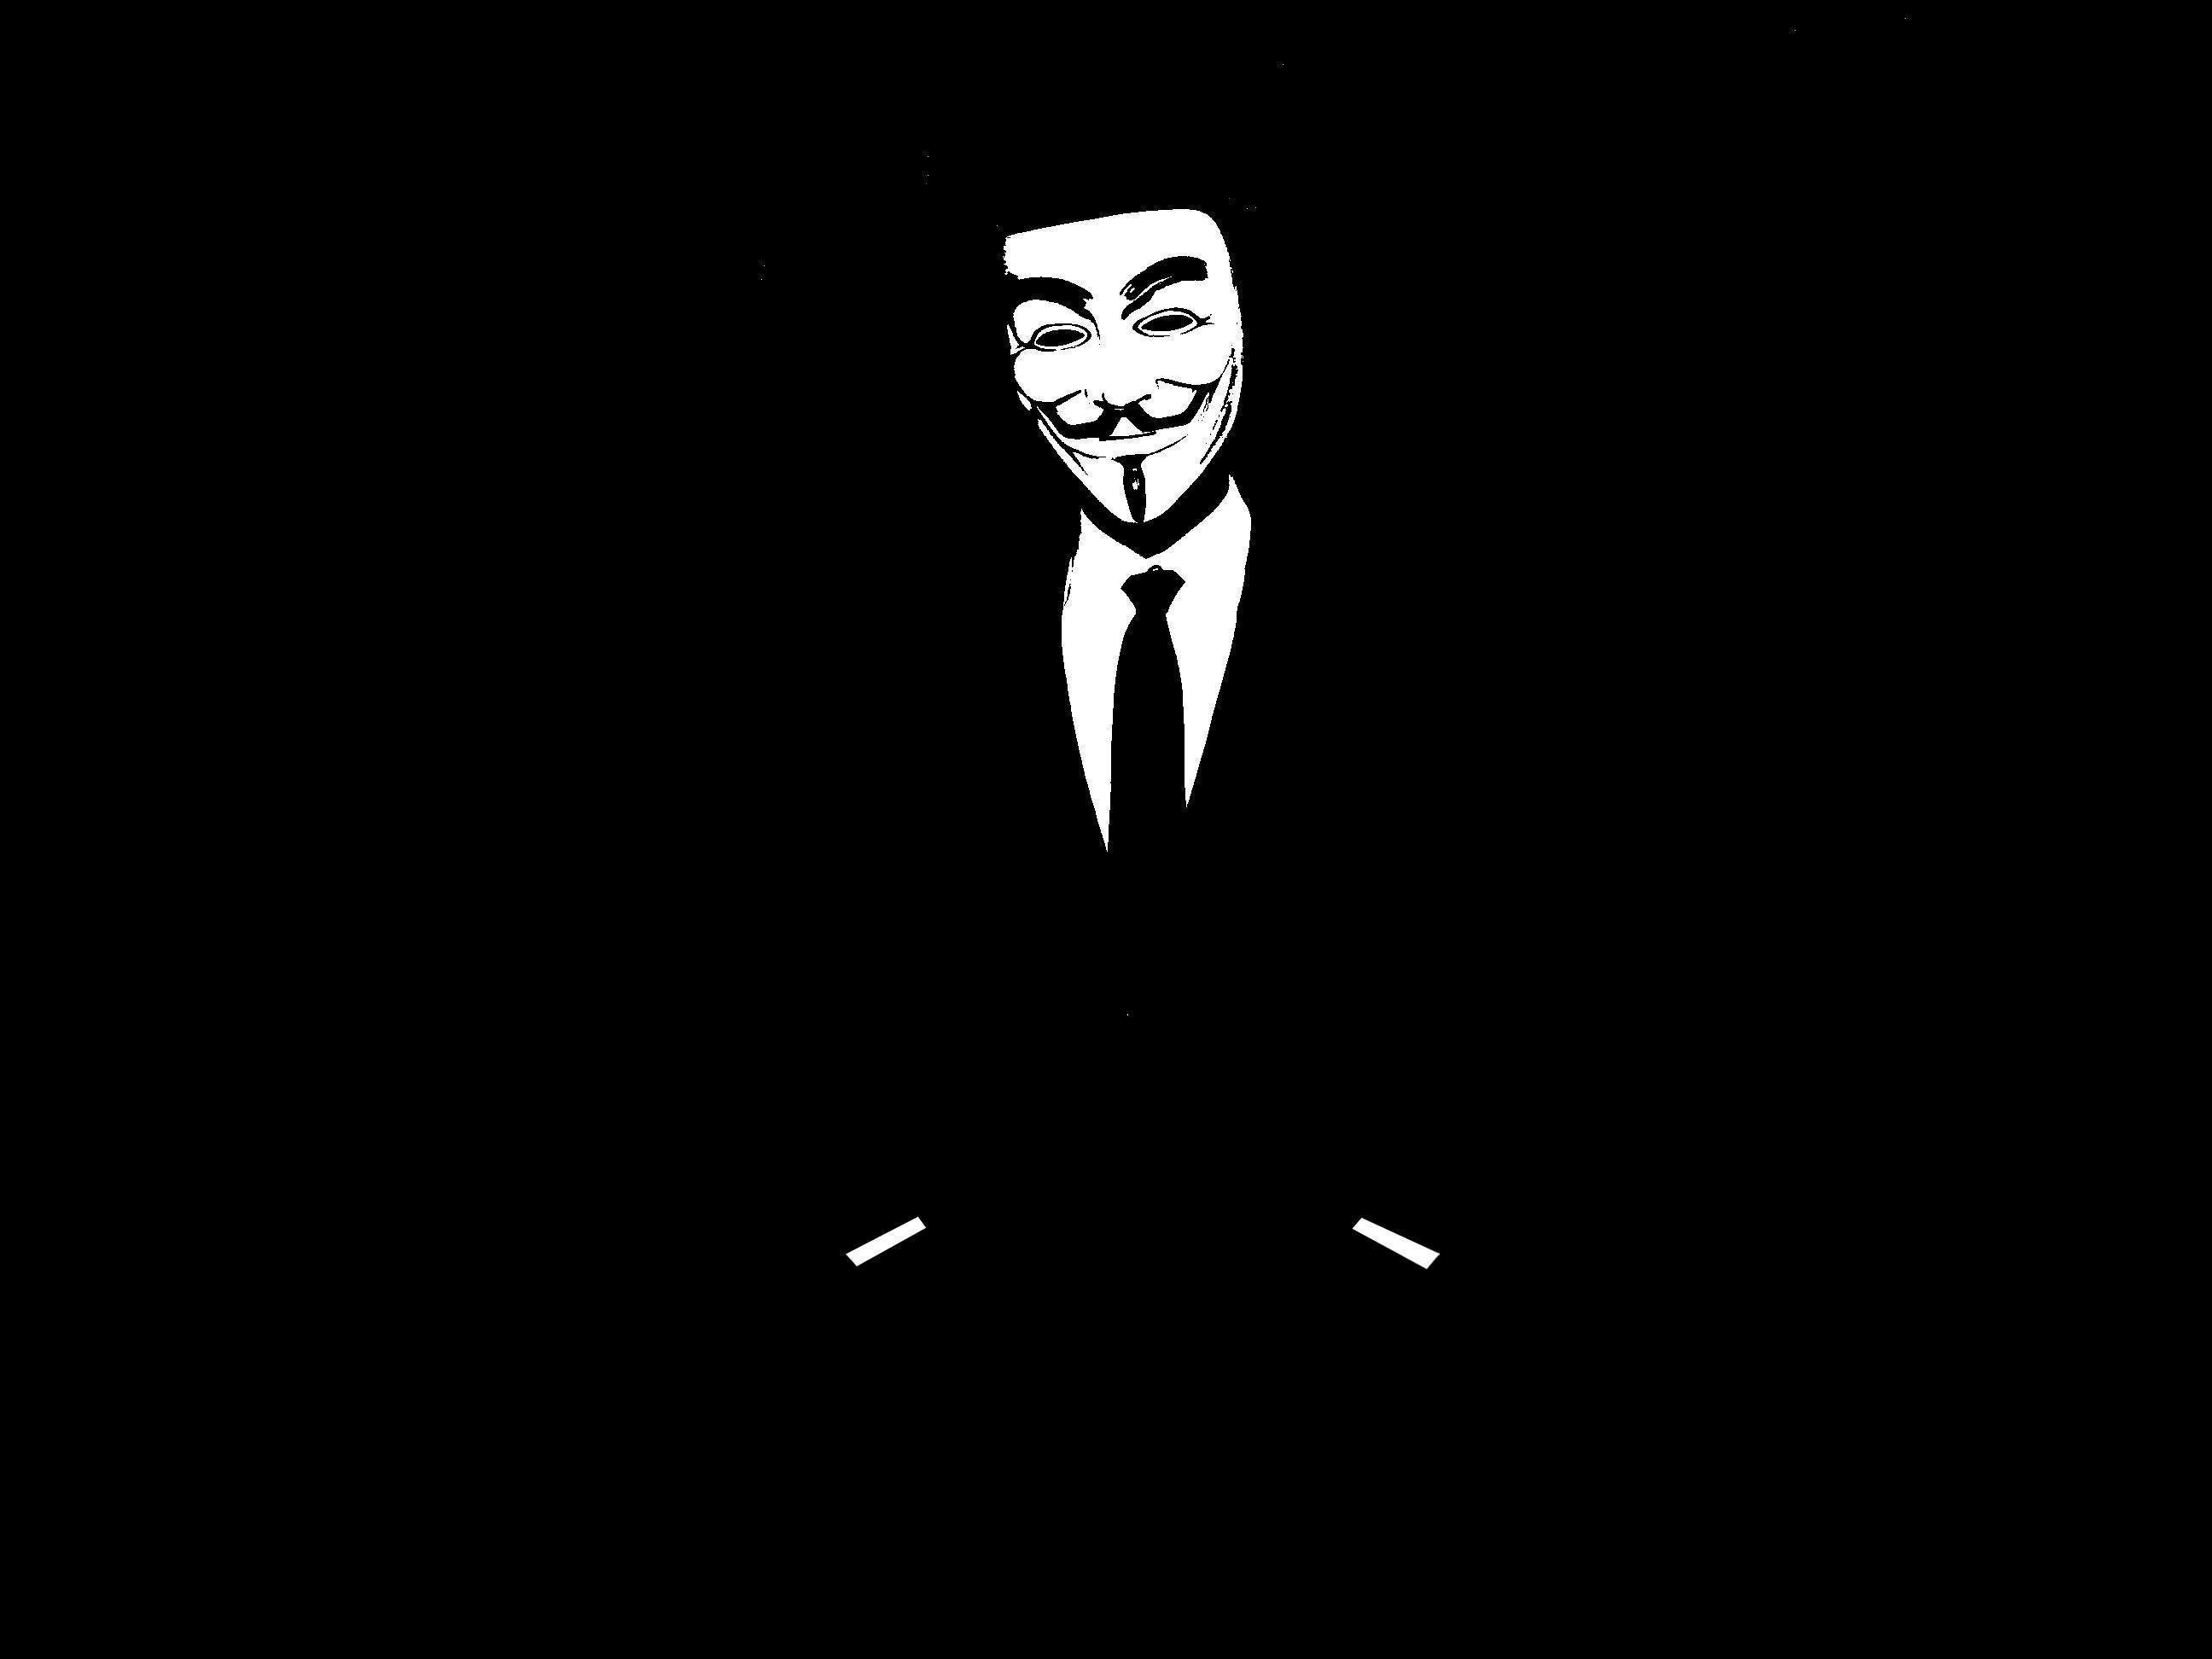 anonymous 2. wallpaper55.com Wallpaper for PCs, Laptops